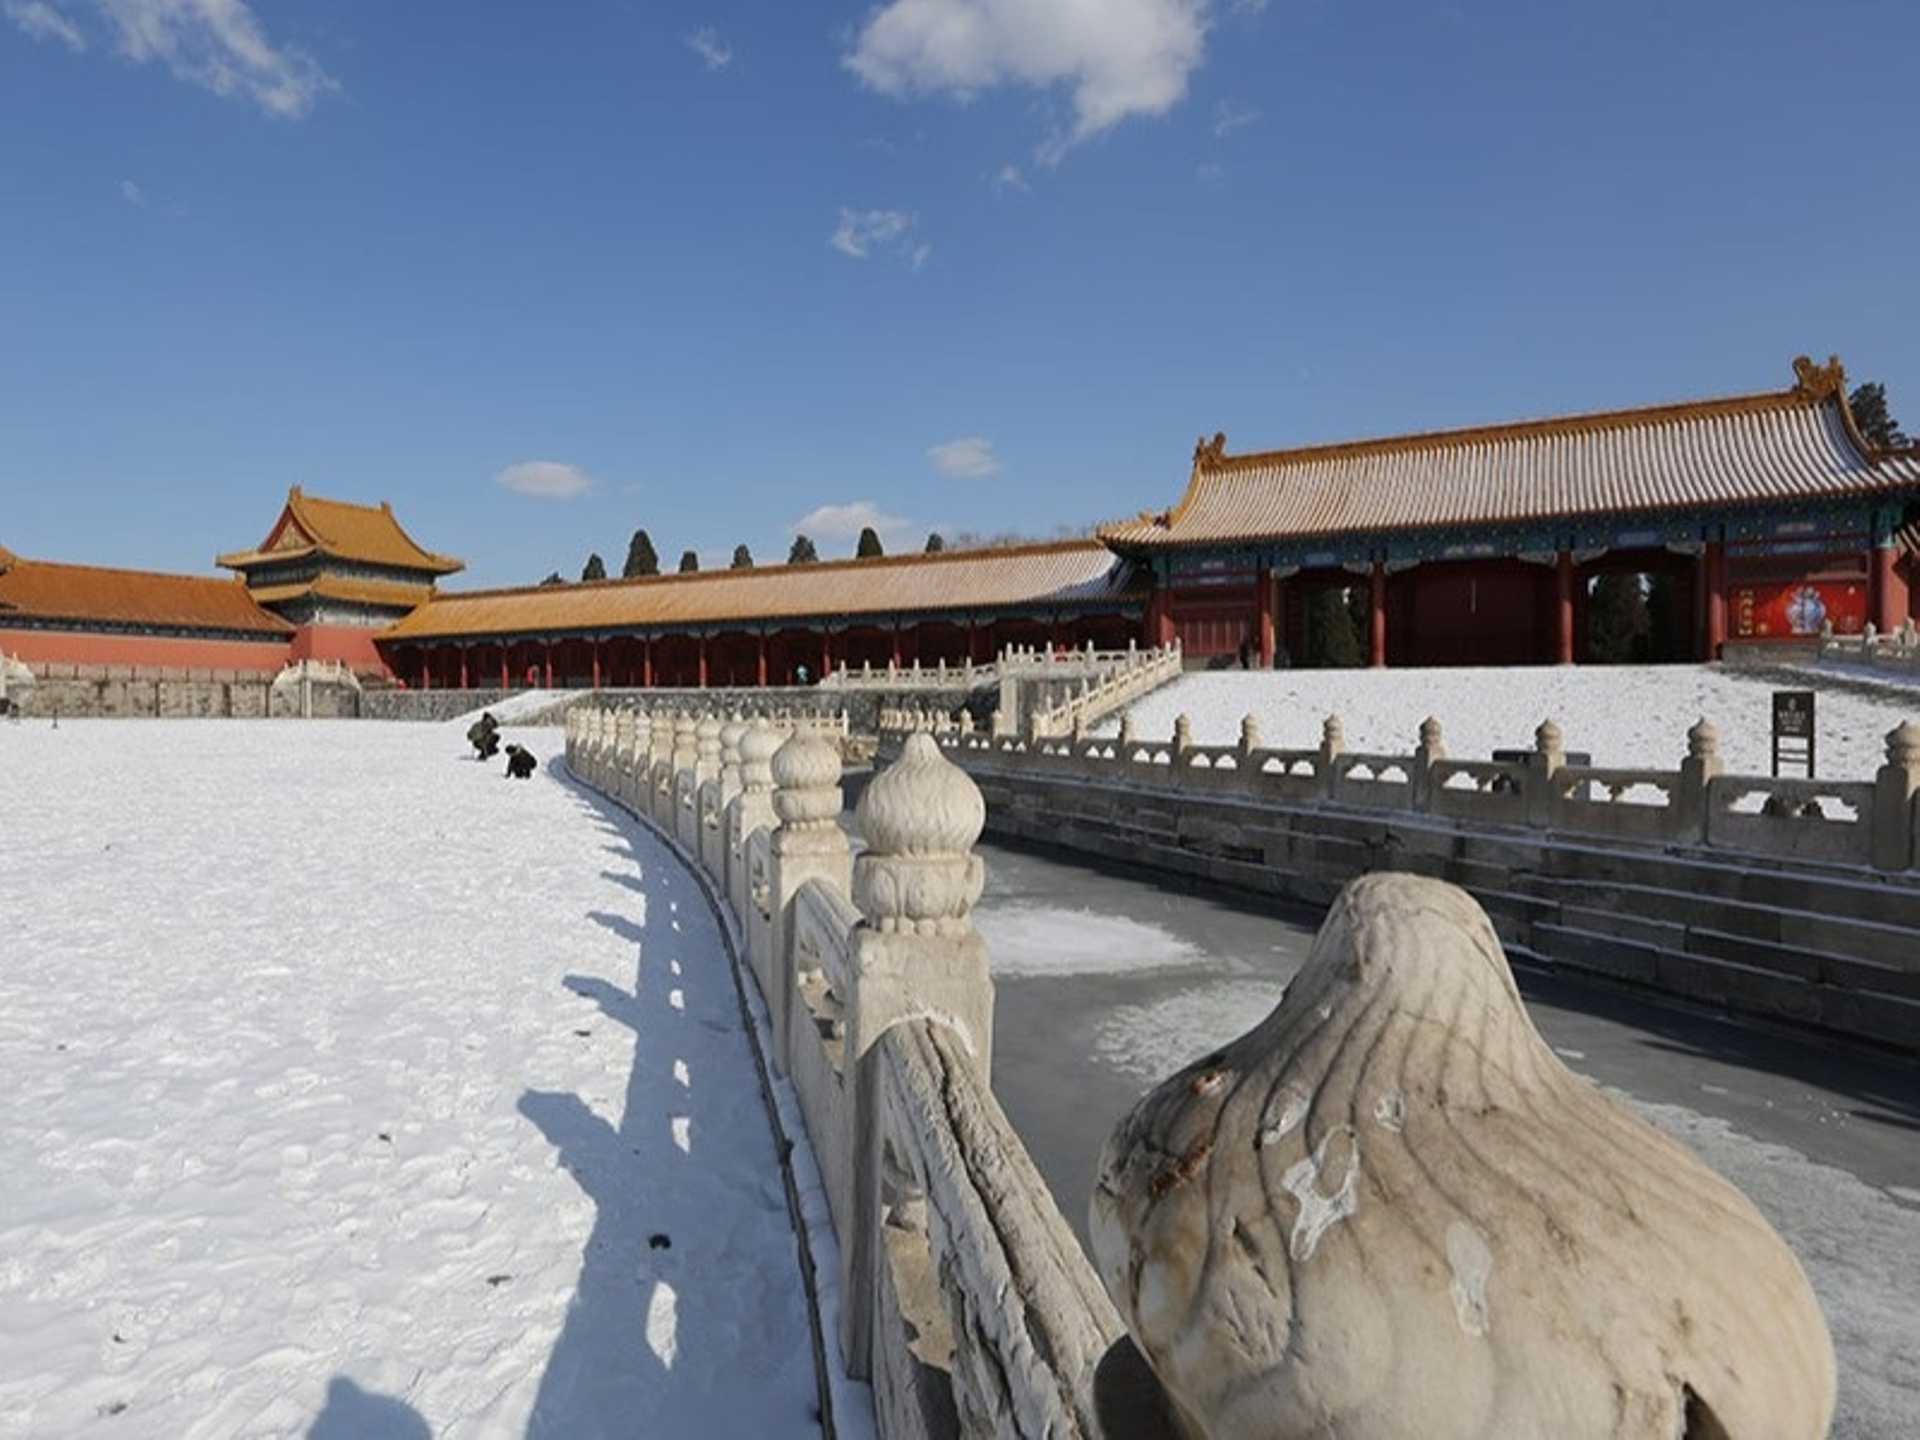 Half Day Imperial Tour of Beijing Forbidden City